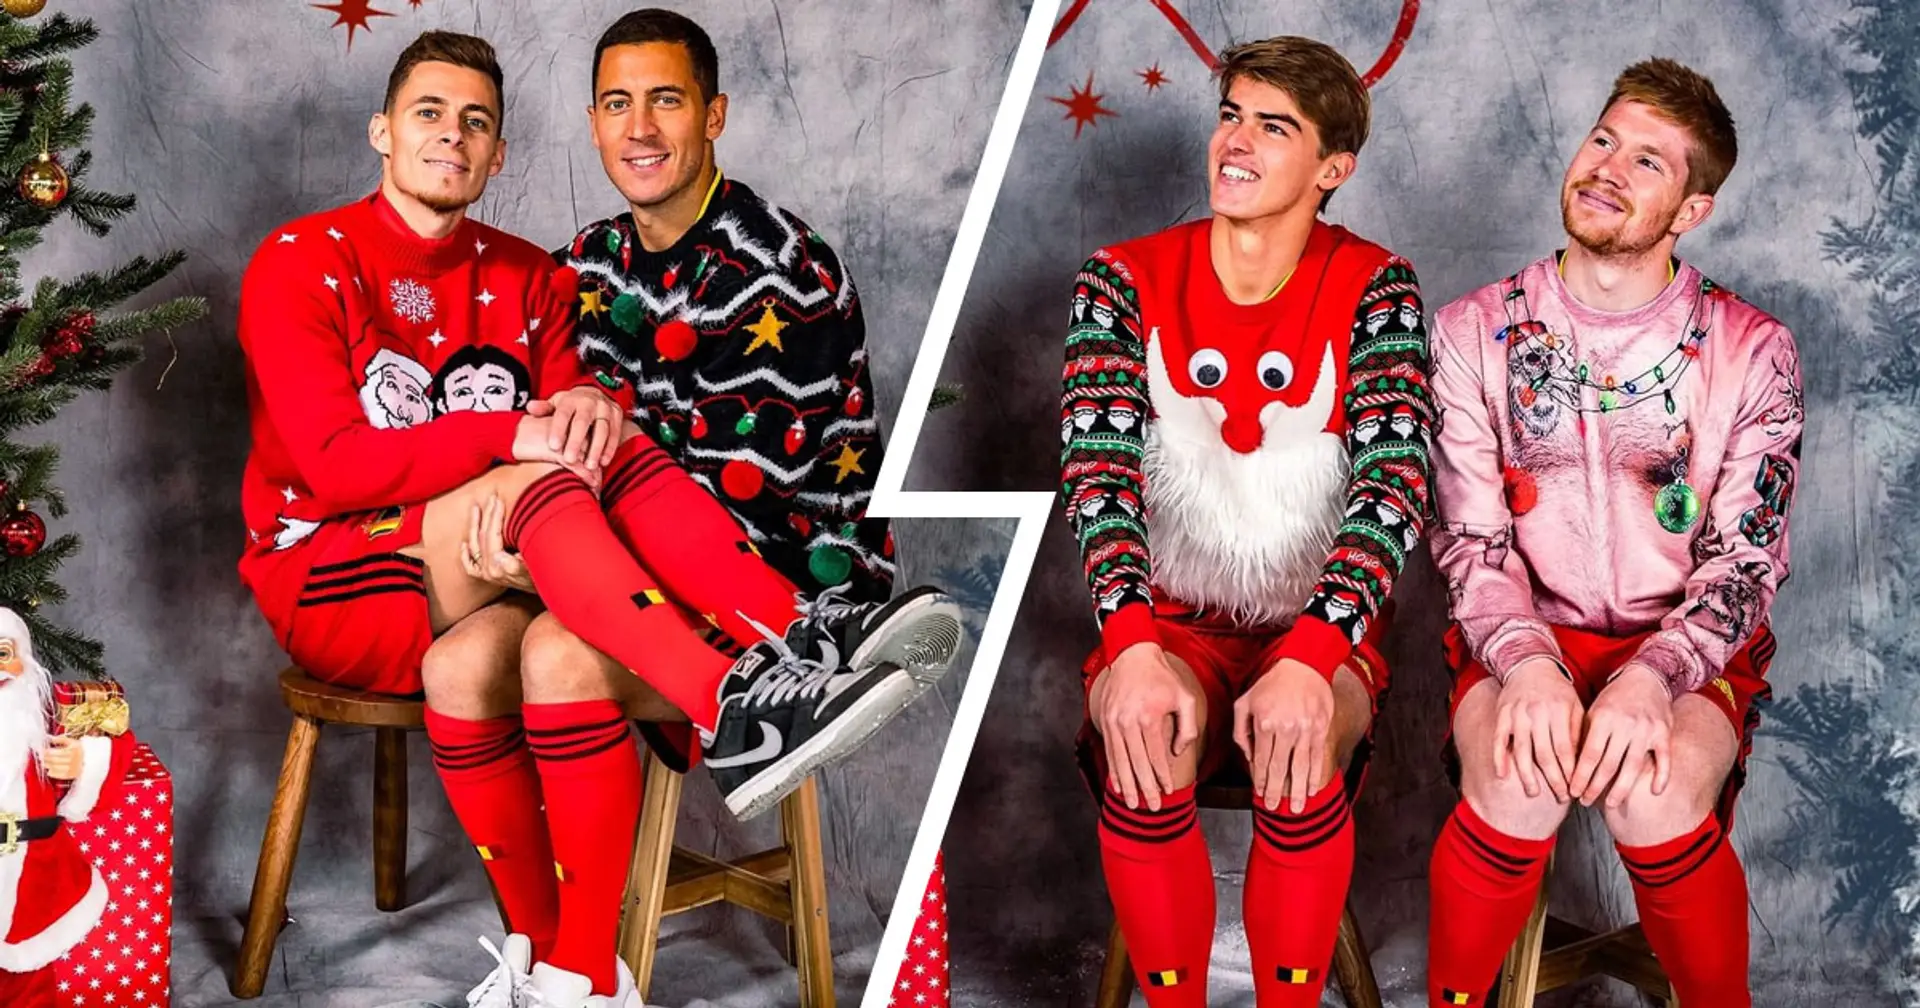 Hazard, De Bruyne and more: Belgium national team release hilarious Christmas cards